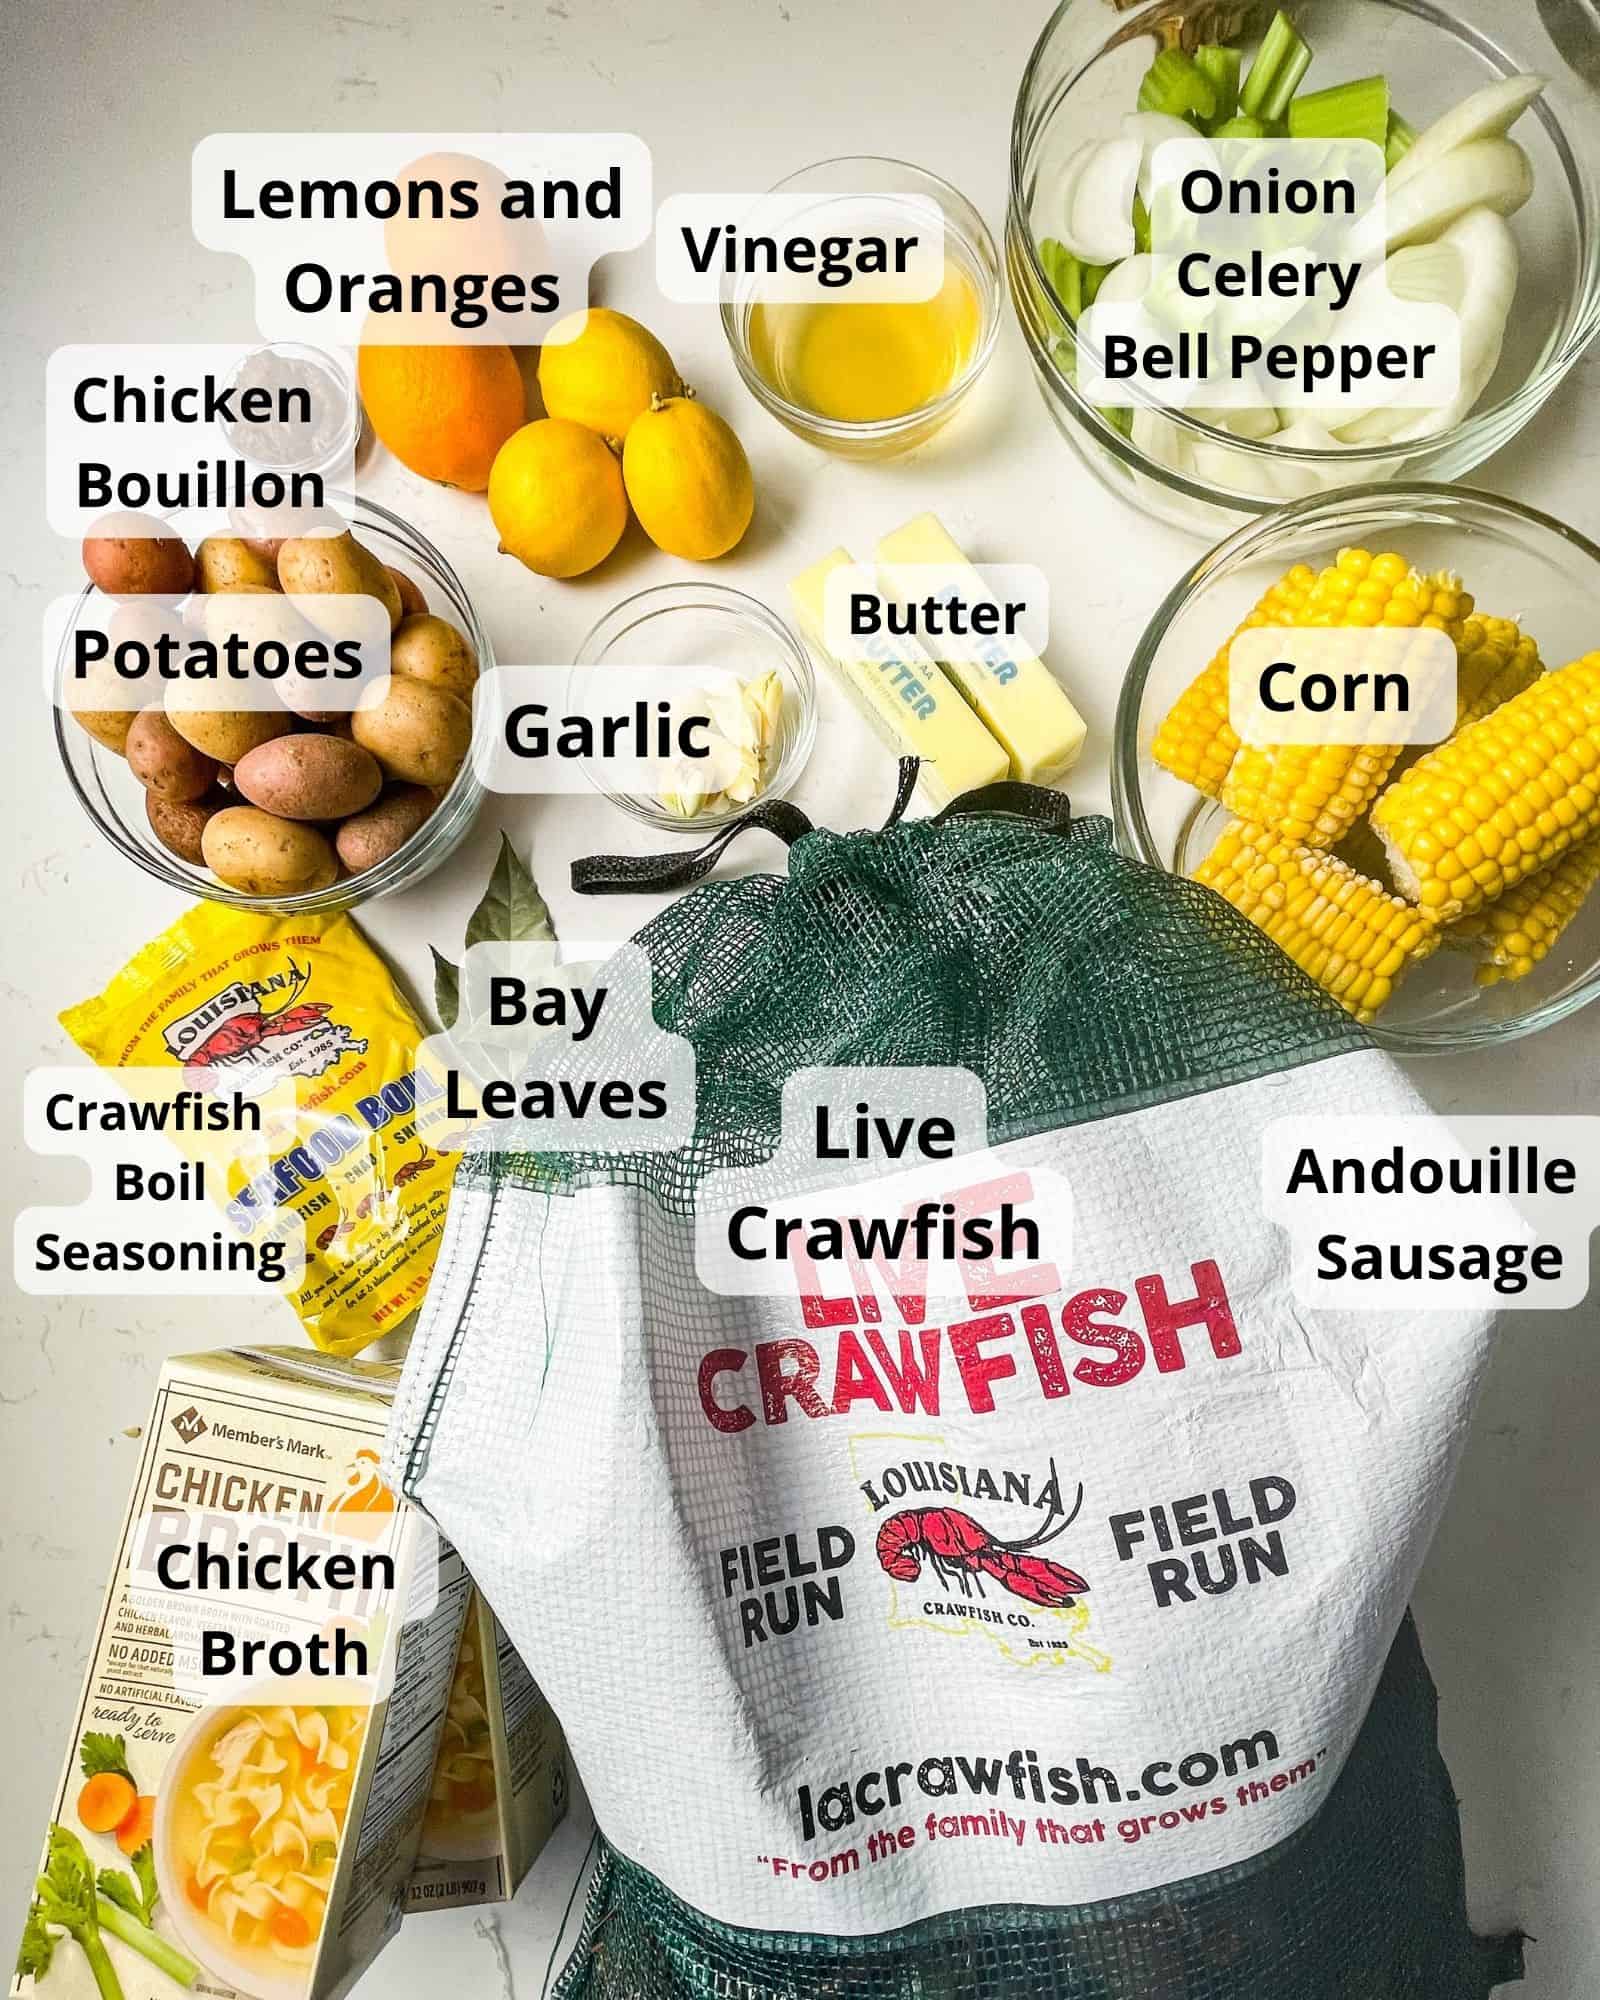 ingredients to make a crawfish boil - live crawfish, green bell peppers, celery, onions, garlic, corn, chicken broth, chicken bouillon, sausage, bay leaves, oranges, lemons, potatoes, crawfish boil seasoning, and vinegar.